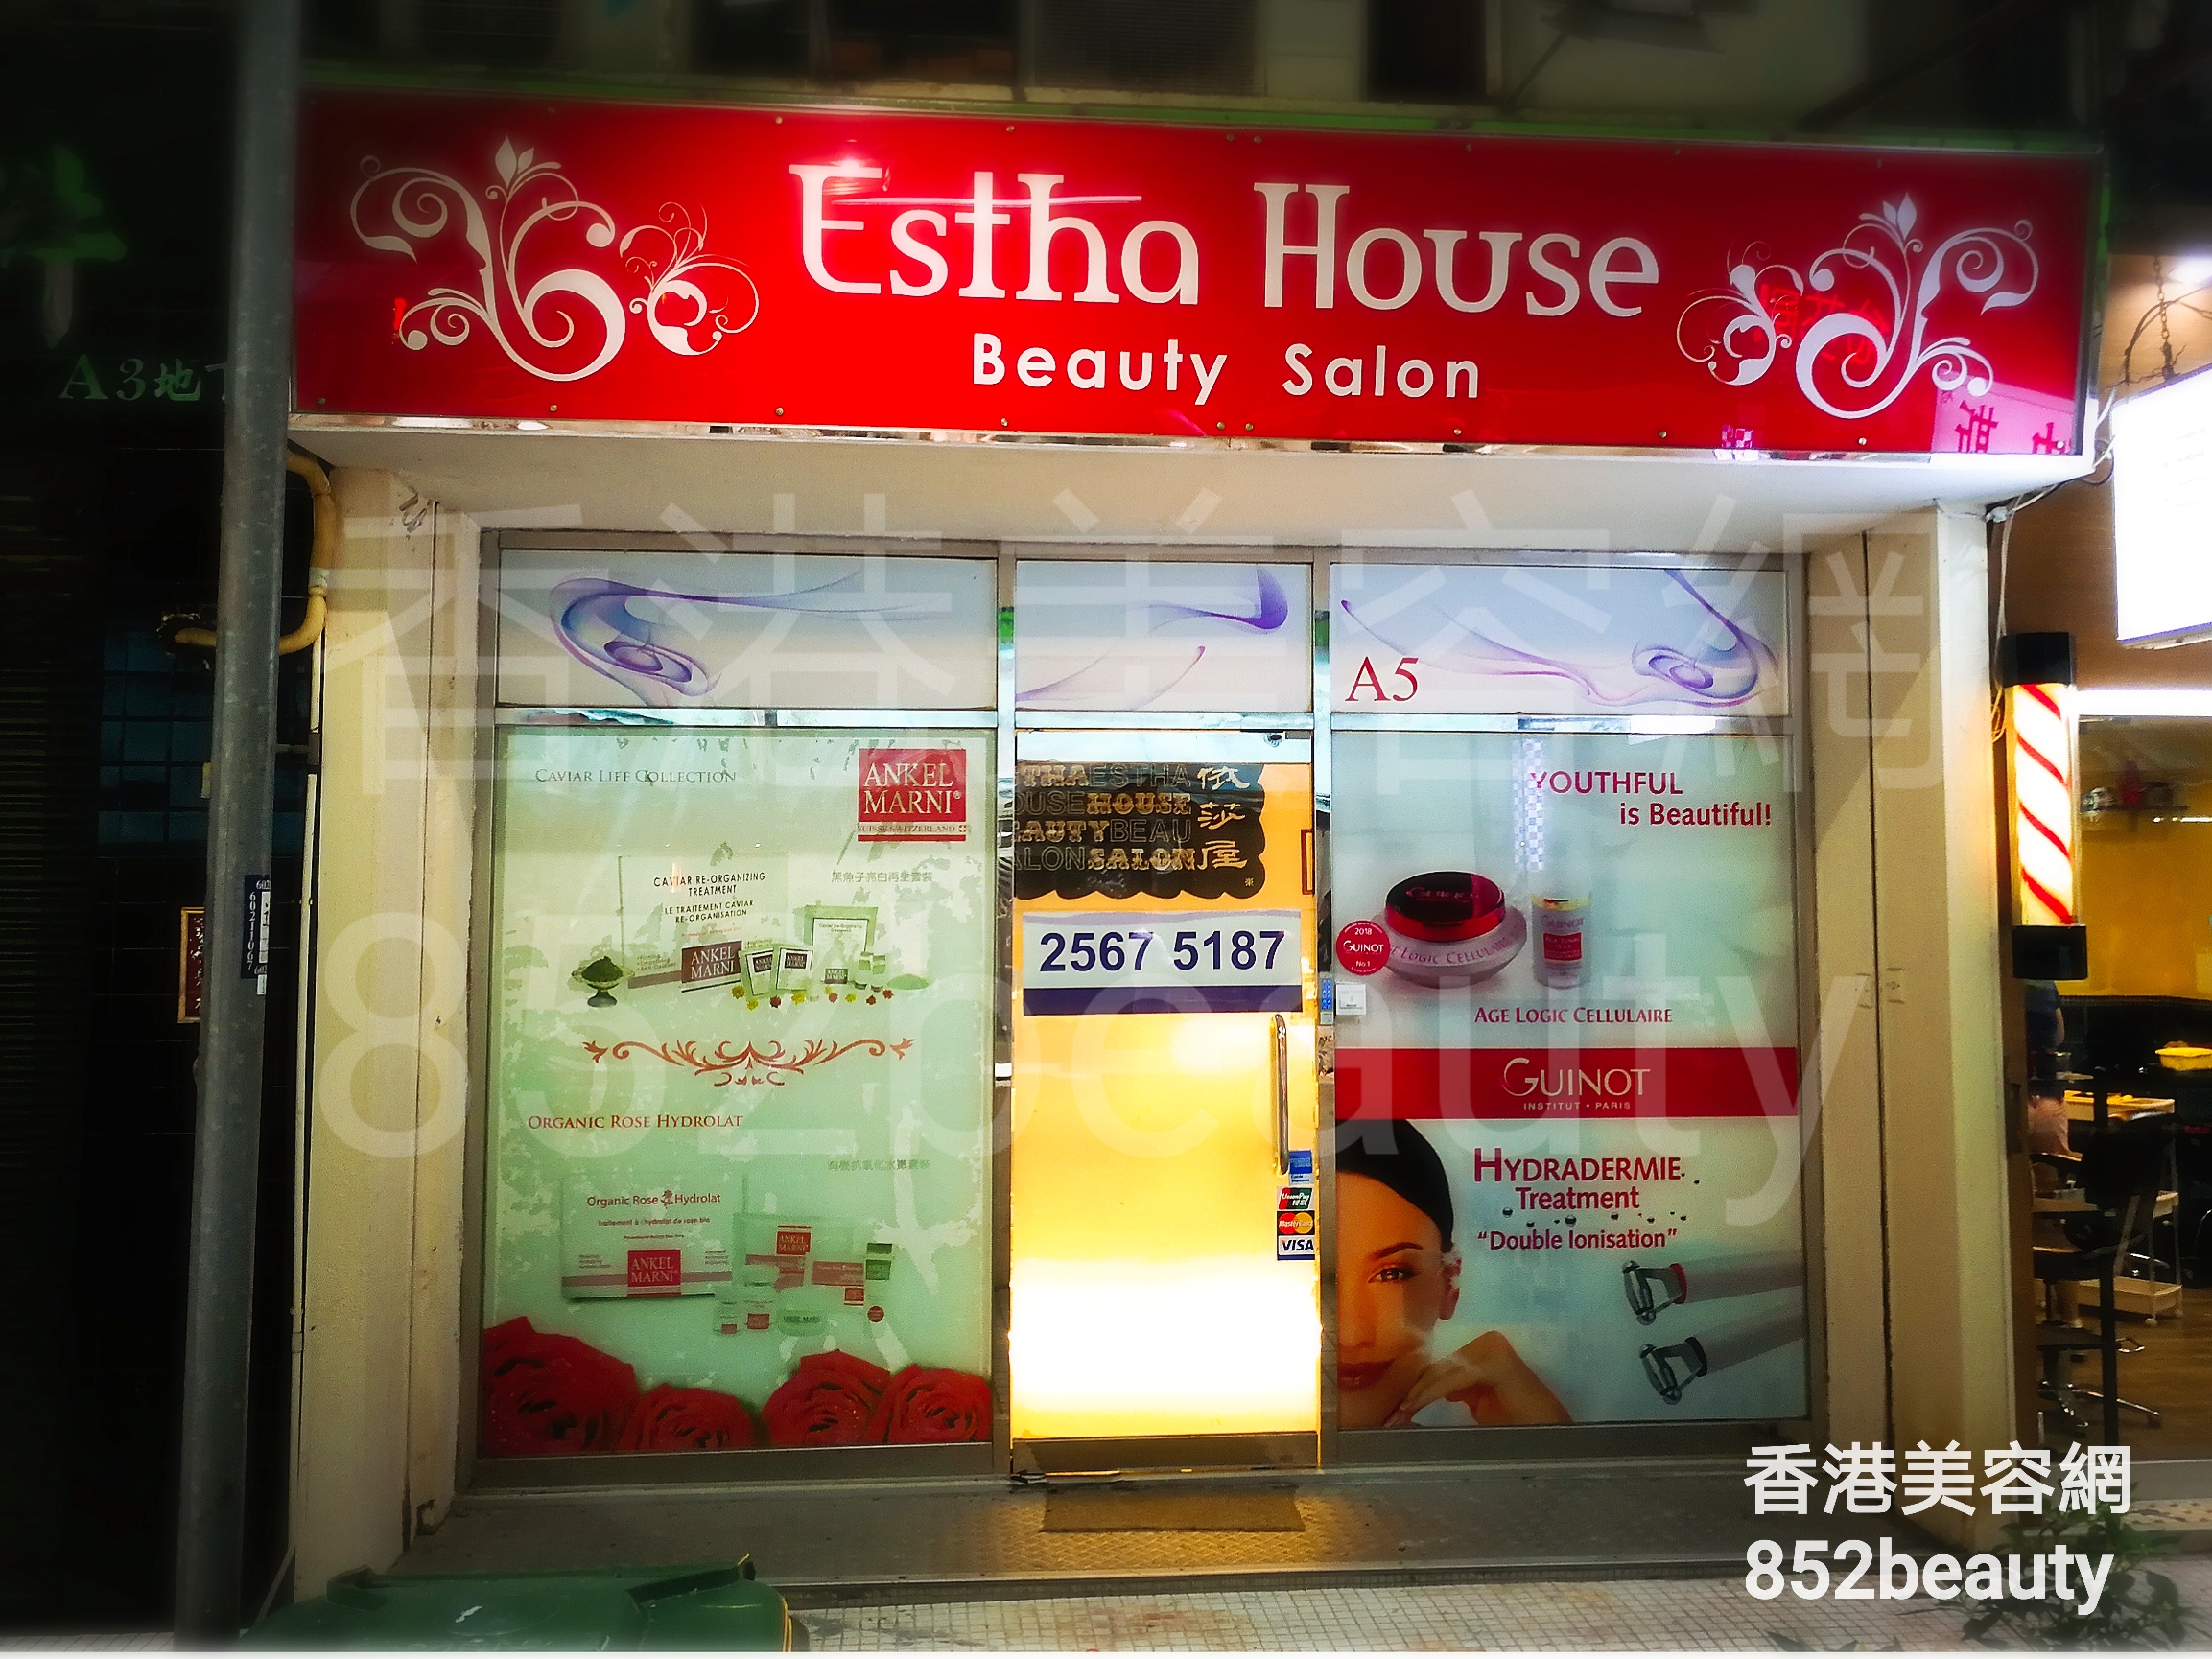 香港美容網 Hong Kong Beauty Salon 美容院 / 美容師: Estha House